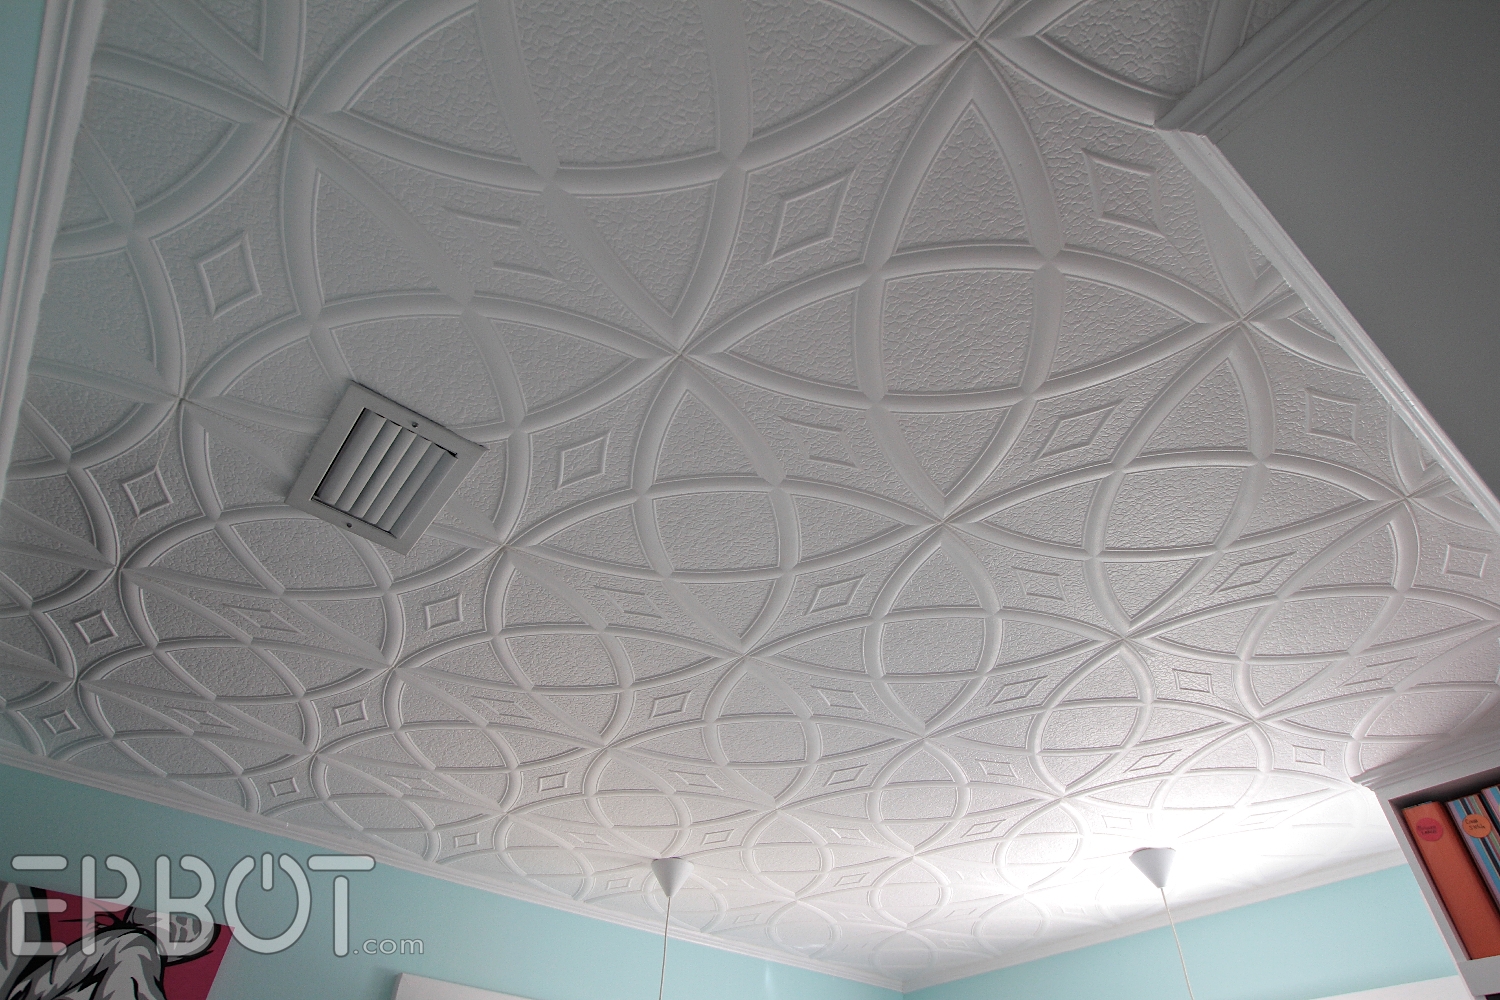 Polystyrene Glue Up Ceiling Tiles Polystyrene Glue Up Ceiling Tiles epbot diy faux tin tile ceiling 1500 X 1000